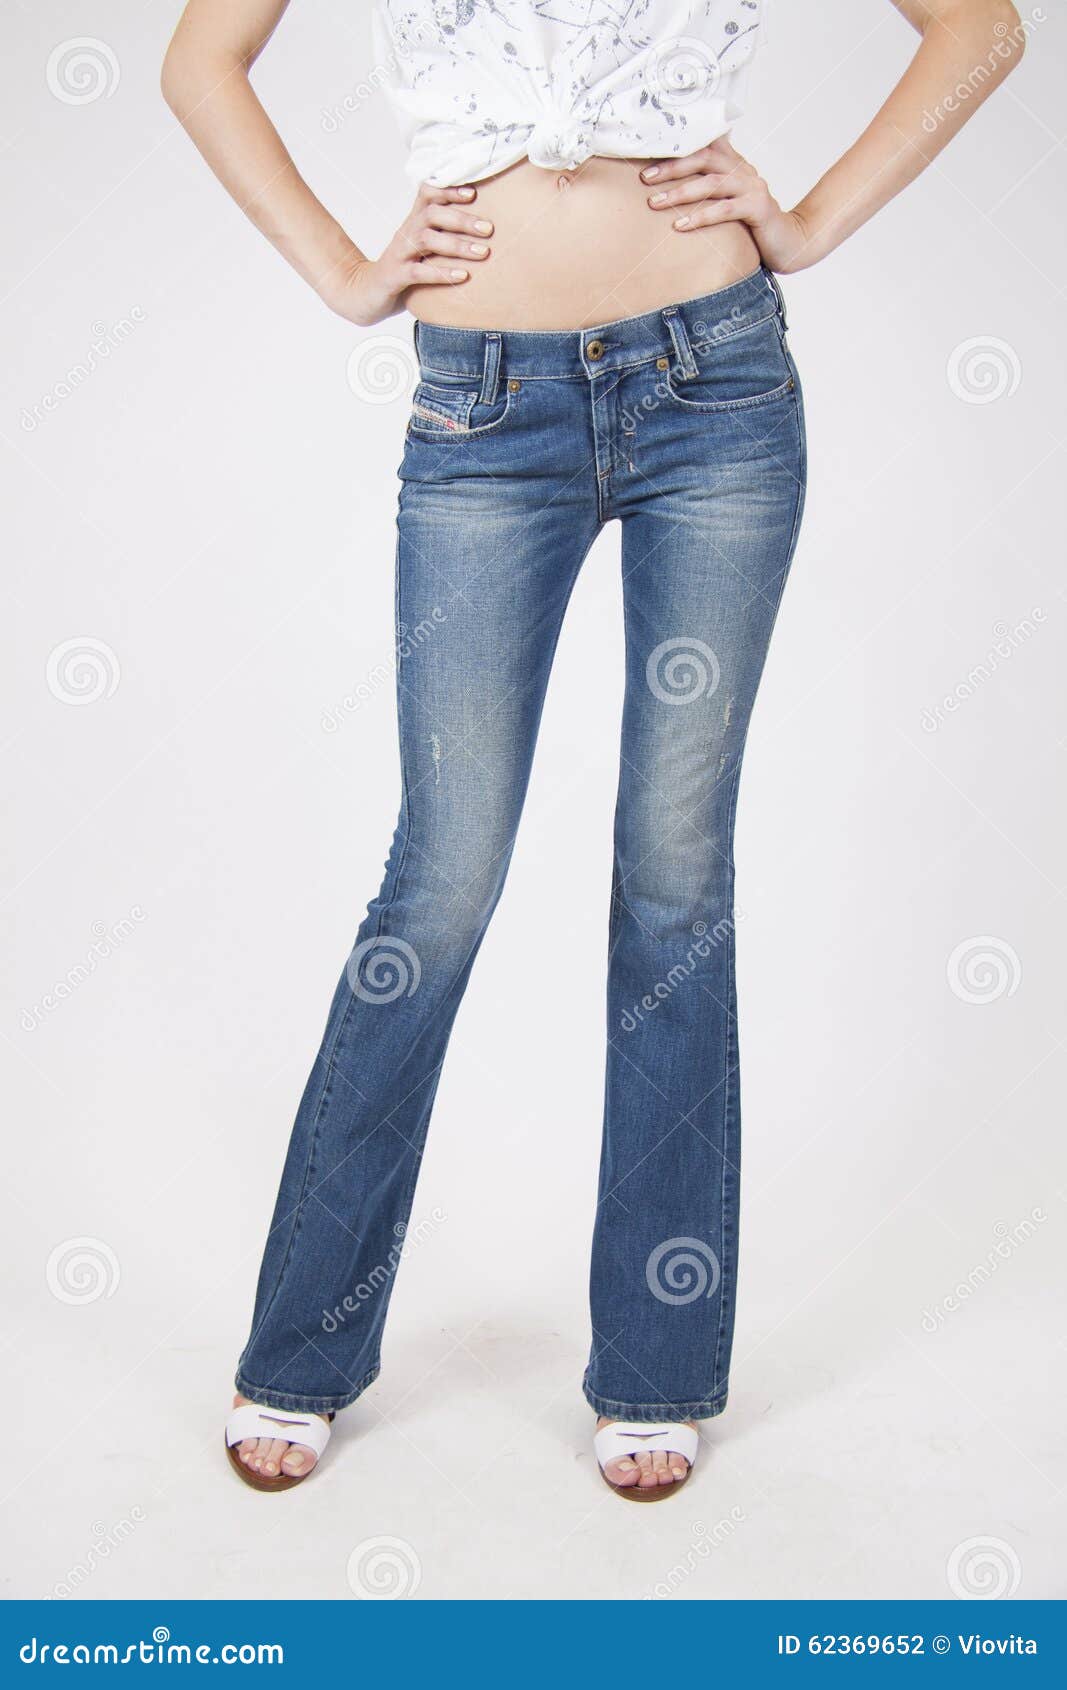 Retro jeans on slim model stock photo. Image of jeans - 62369652